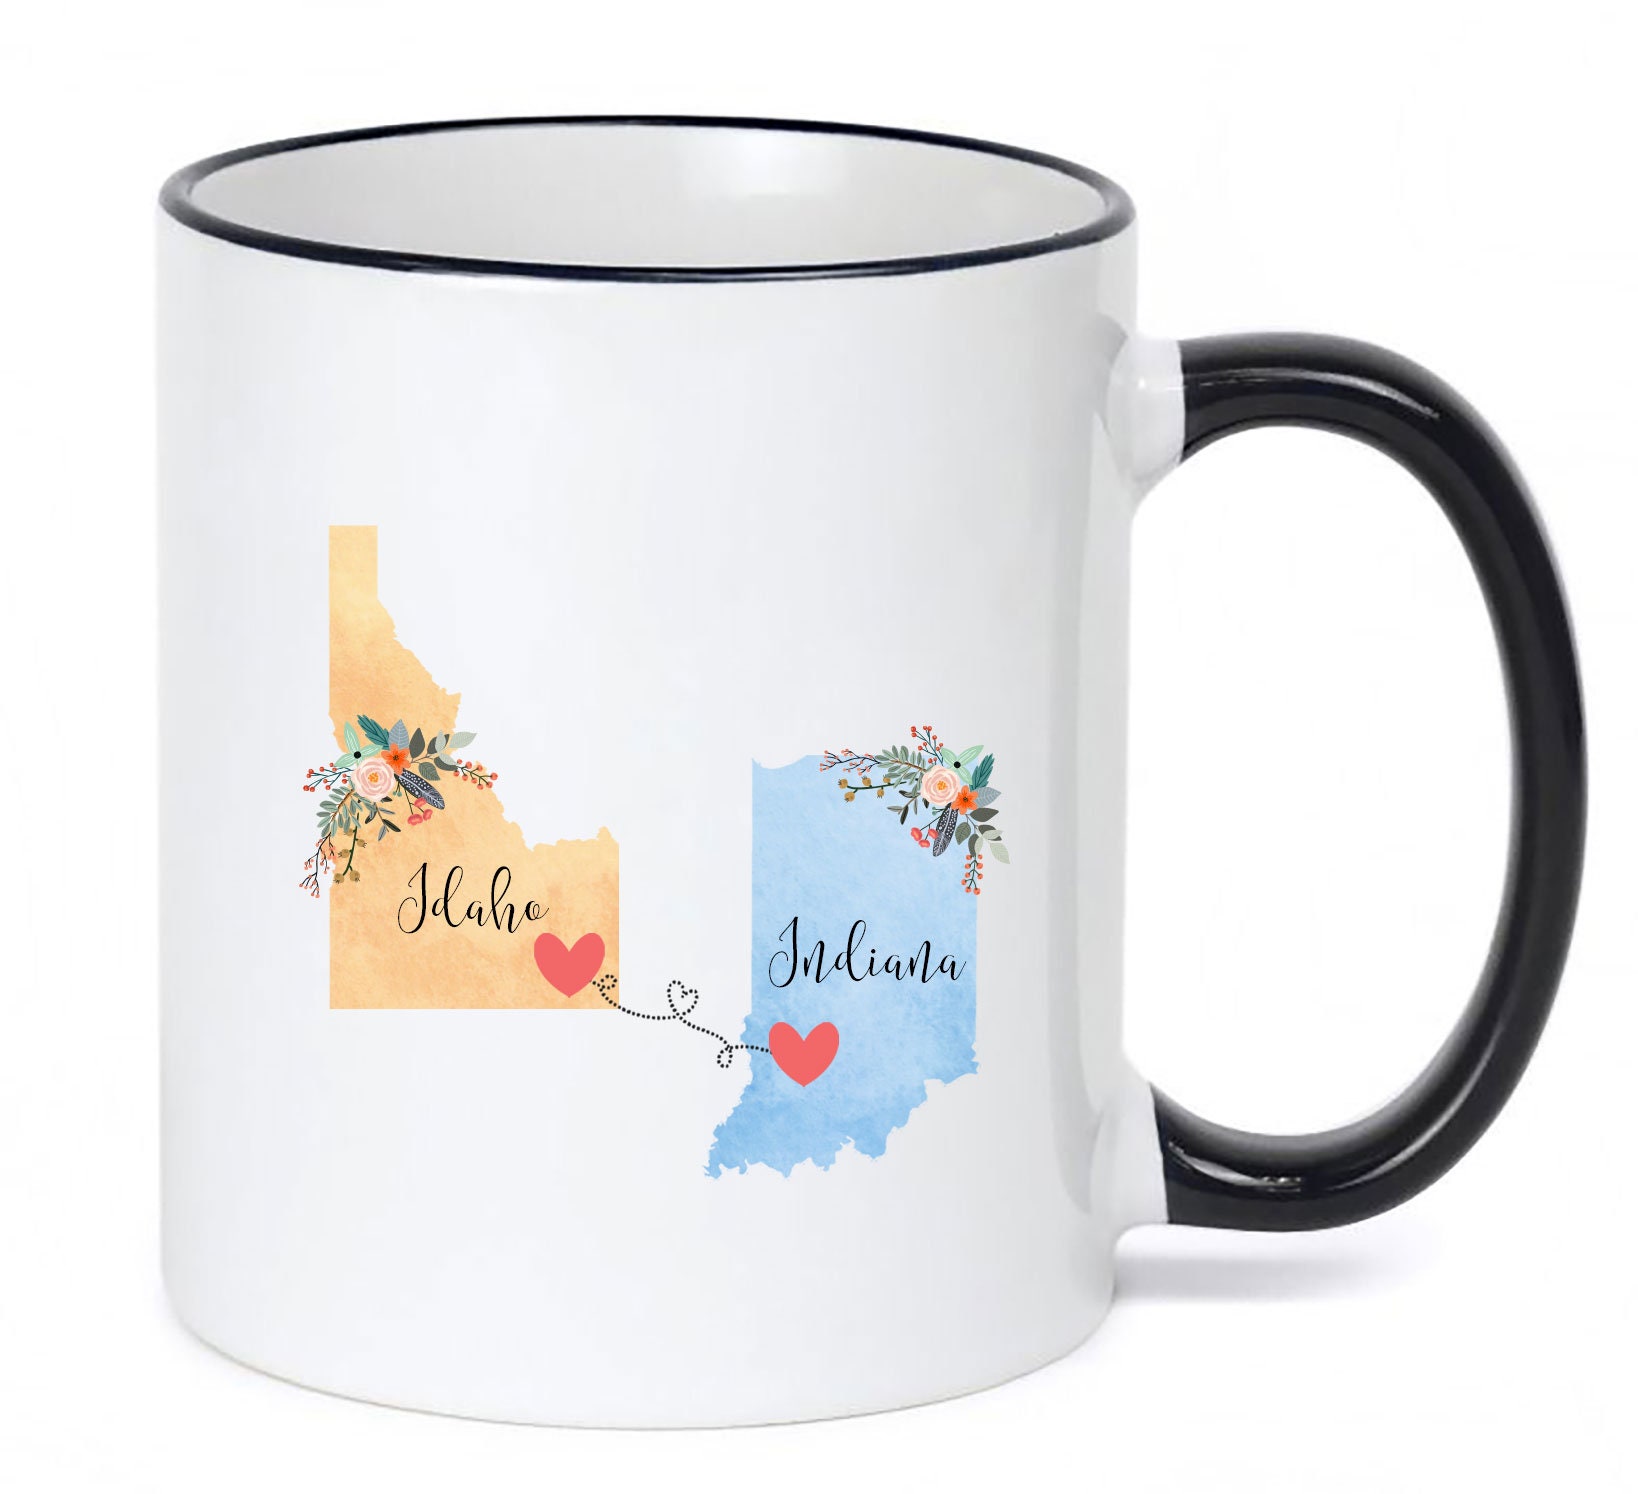 Indiana cup Indiana coffee mug Love Indiana mug Indiana coffee cup Indiana state mug 11oz Black US State mugs